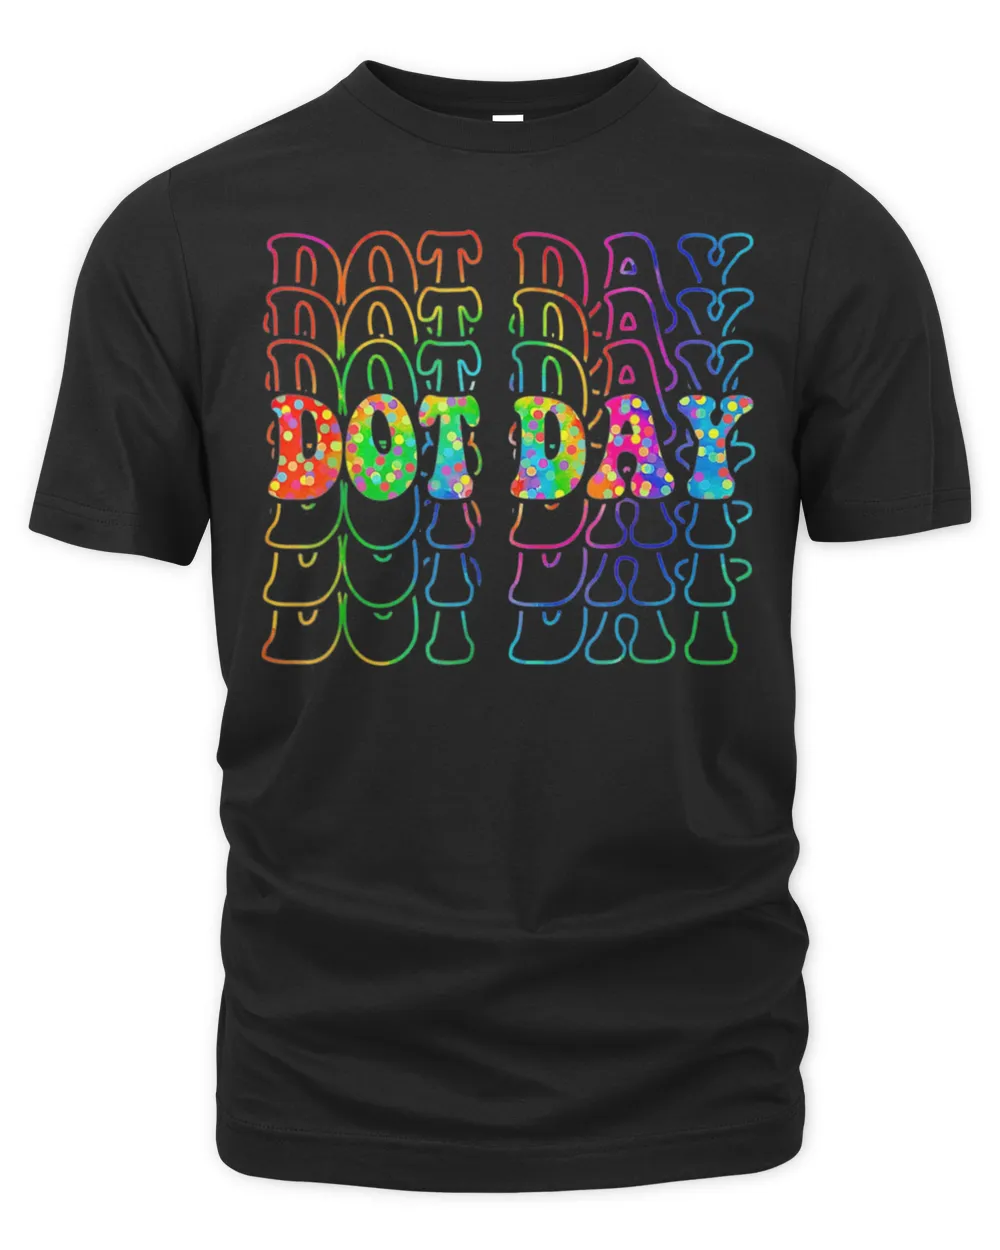 Happy Dot Day 2022 International Dot Day T-Shirt